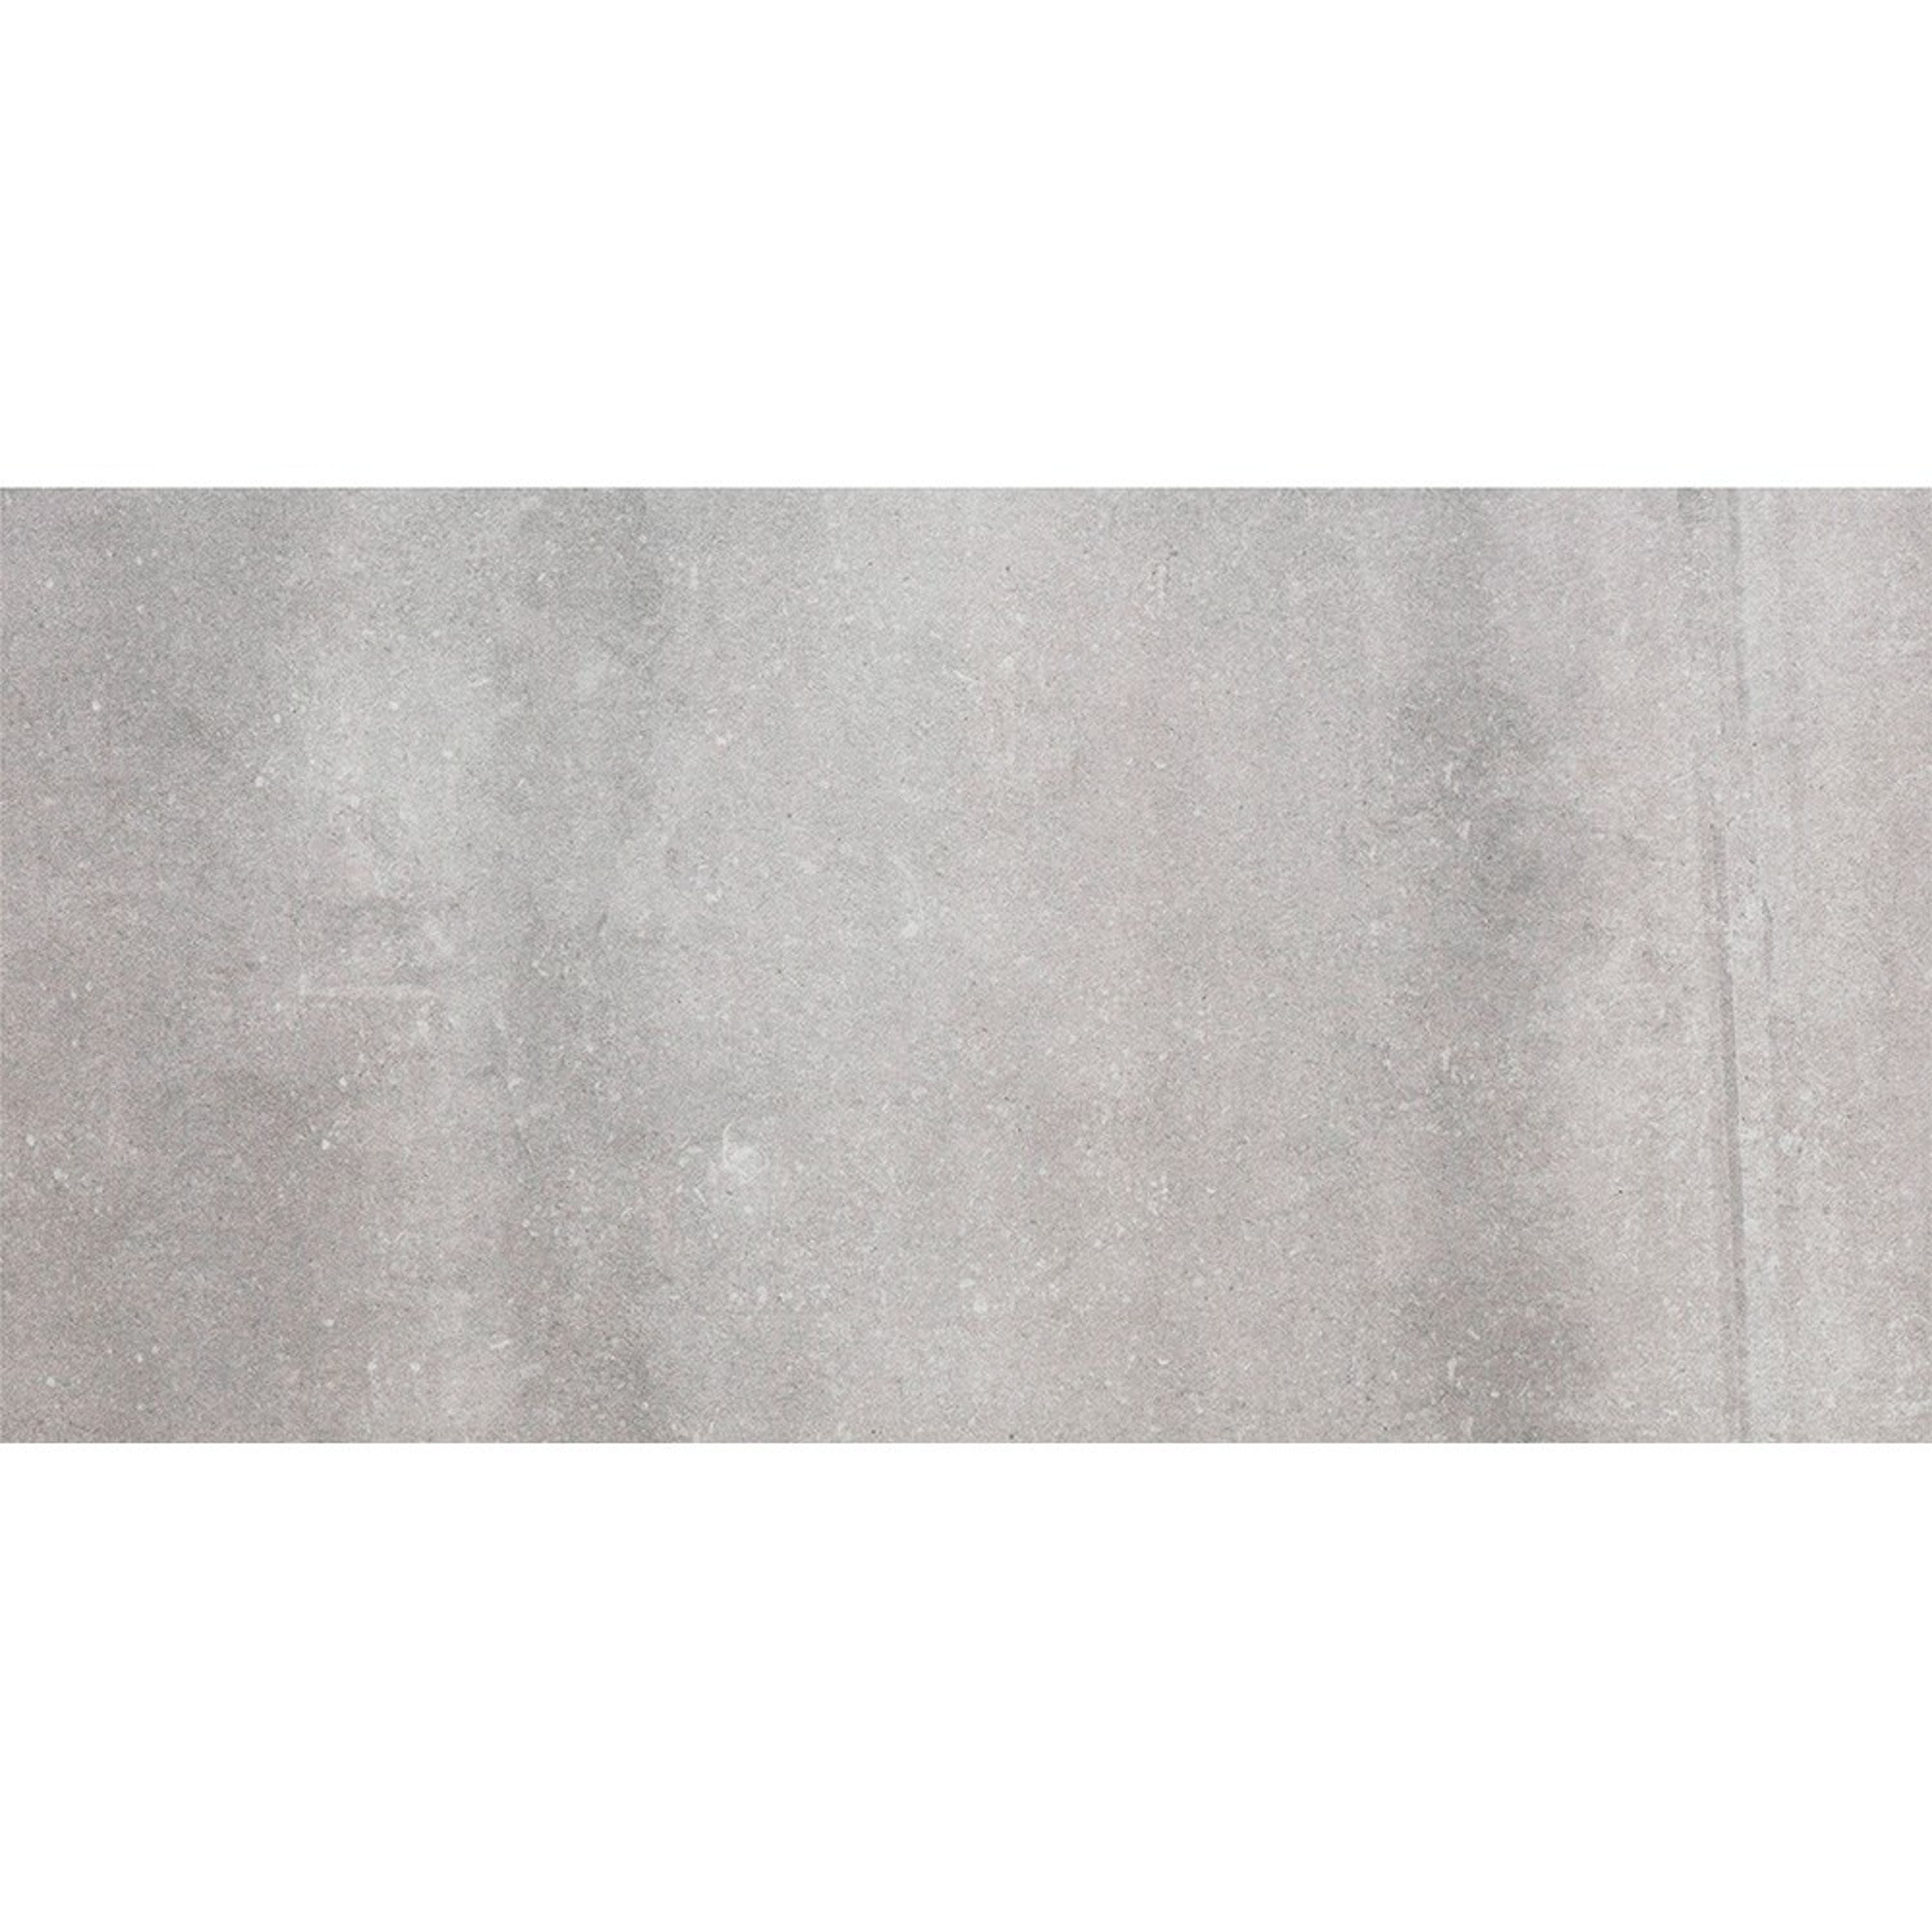 Klinker Bricmate J36 Limestone Light Grey 30×60 cm